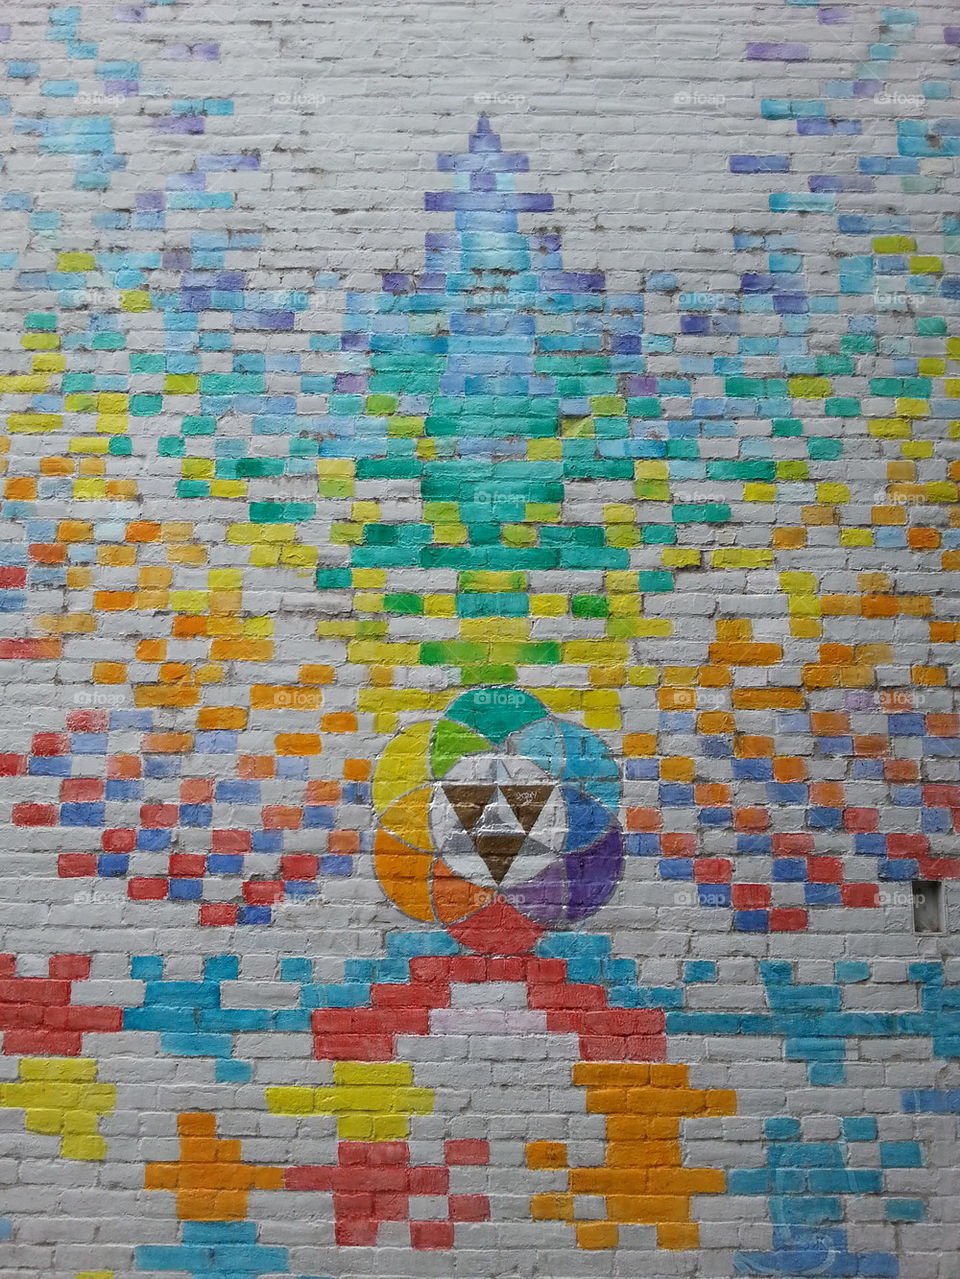 rainbow of bricks